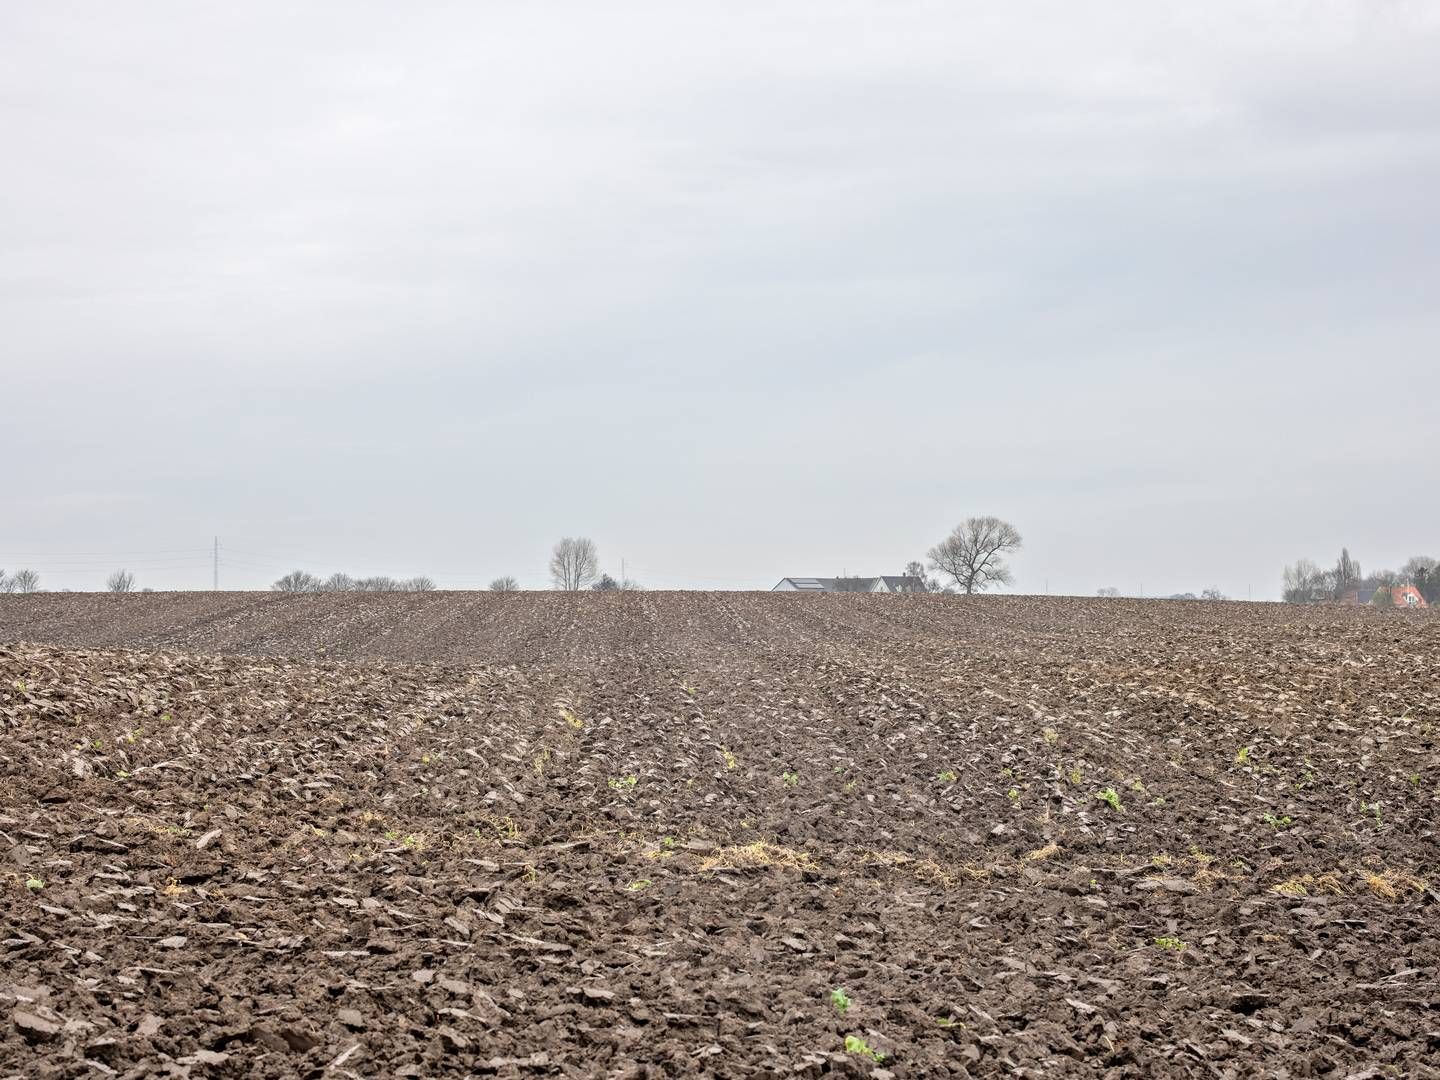 Landbrugsjord har skabt stabil indtjening for den tyske forretningsmand Rinnert de seneste år, viser regnskab. | Foto: Marius Renner